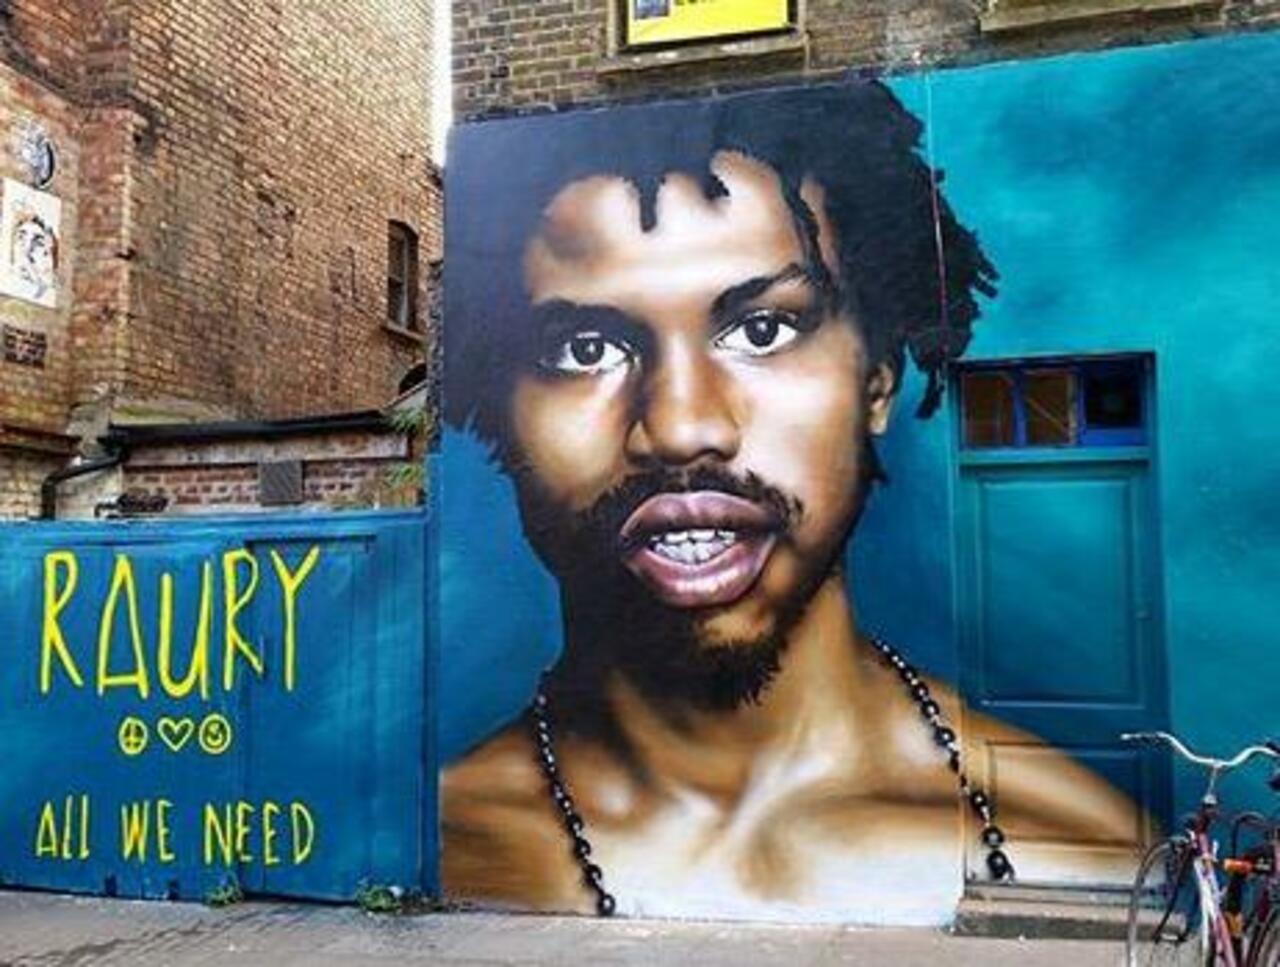 New Street Art of Raury by Olliver Switch in Brick Lane 

#art #graffiti #mural #streetart http://t.co/vwUxMiQHqz